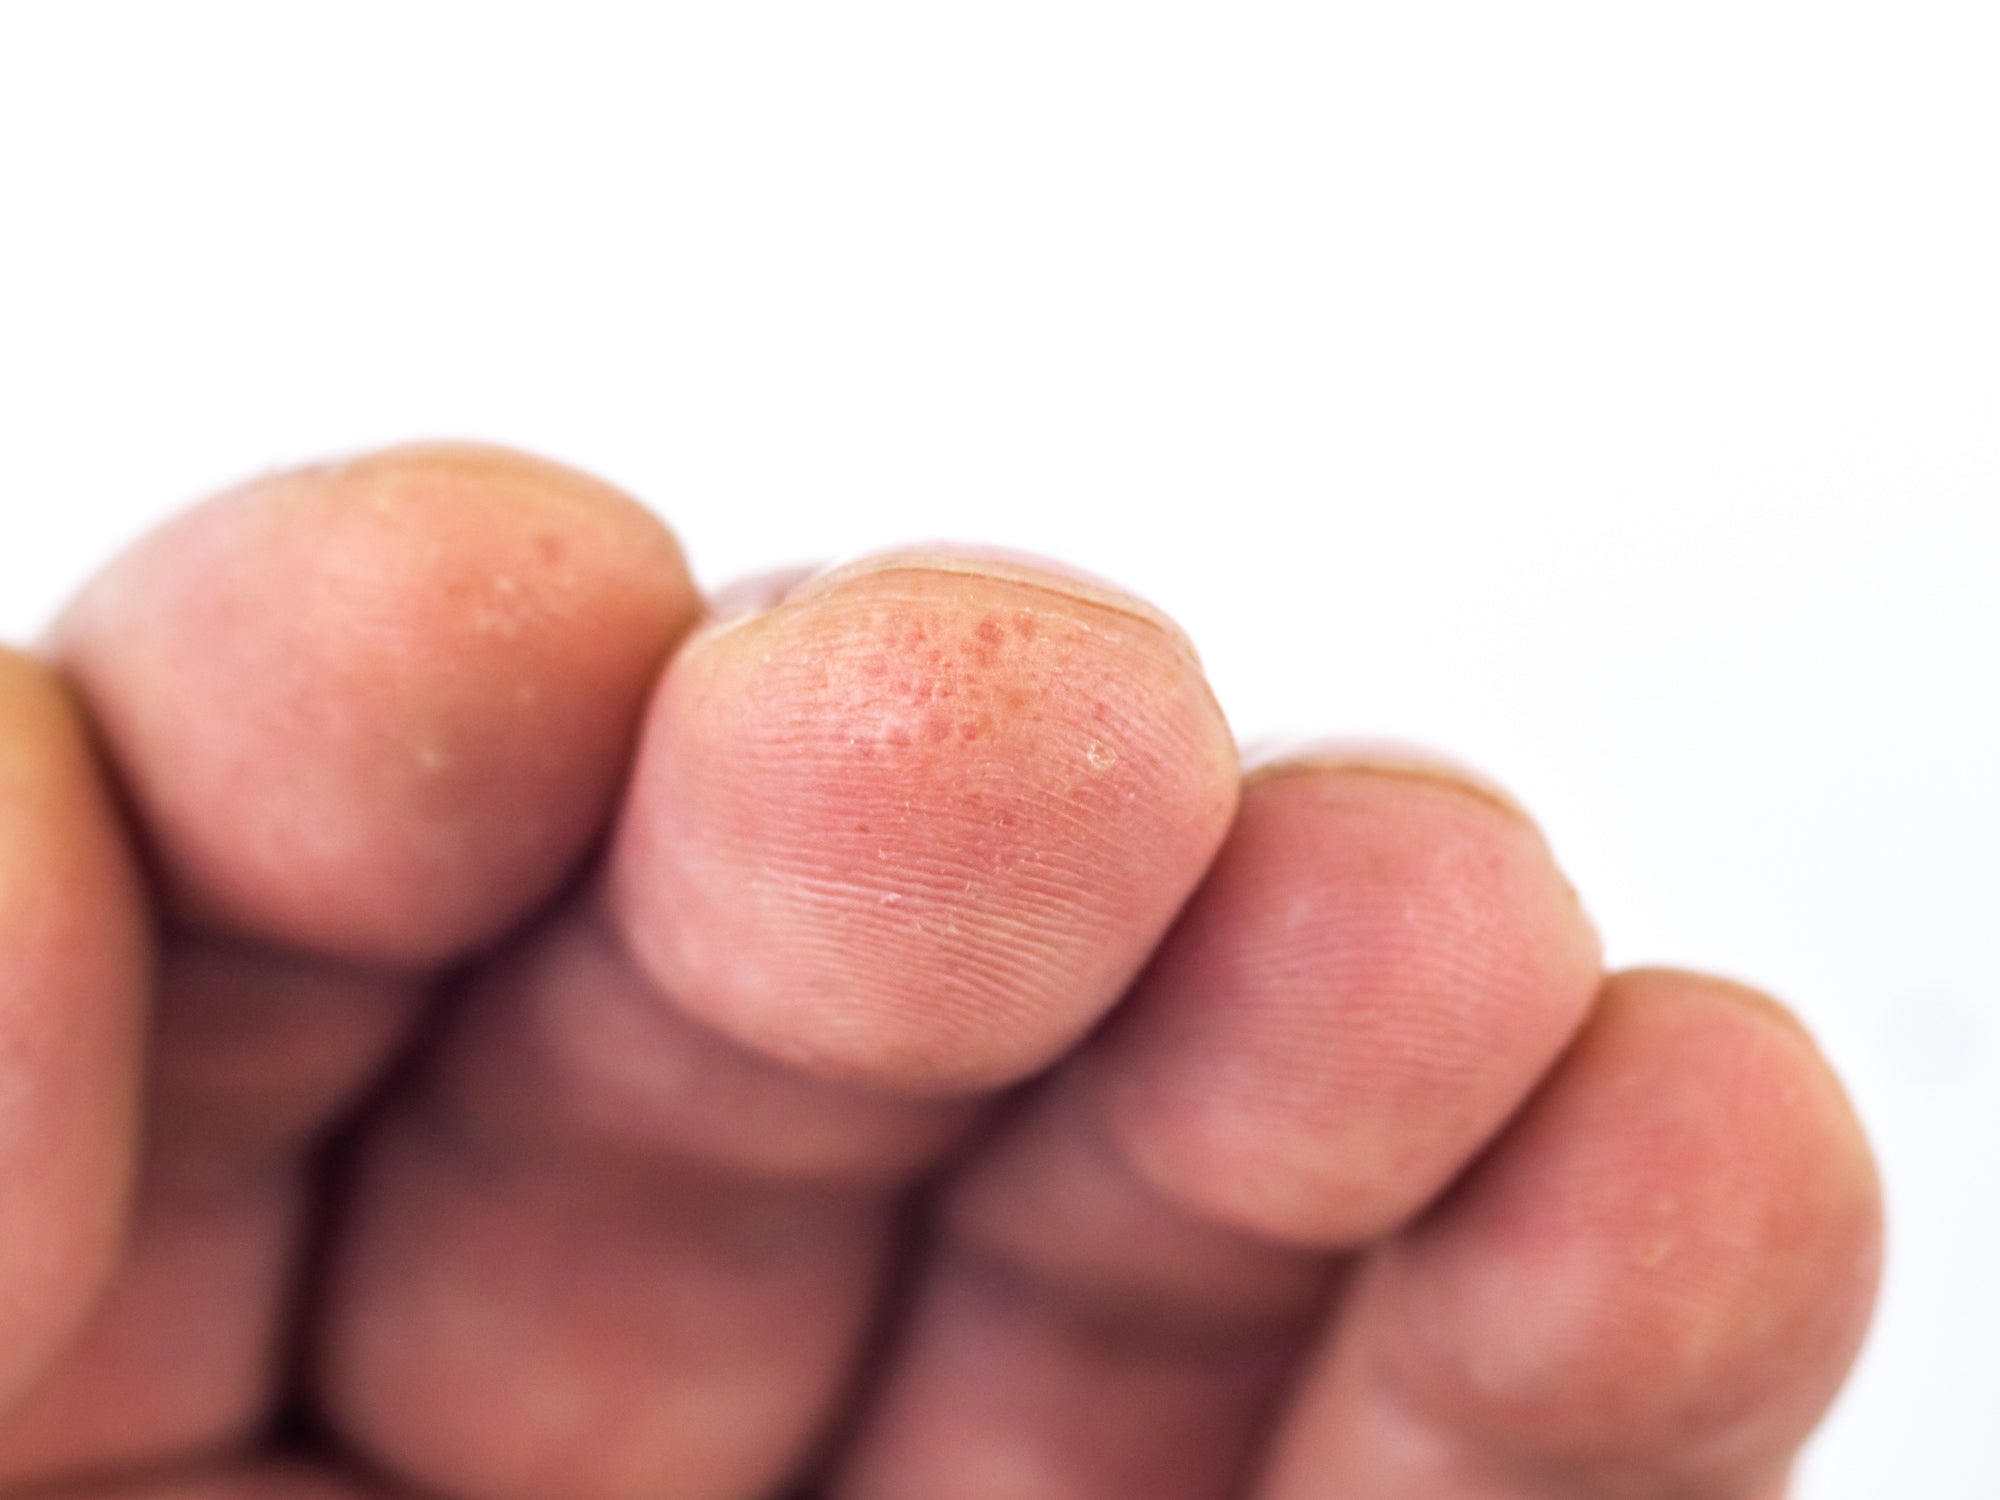 dyshidrotic eczema fingers